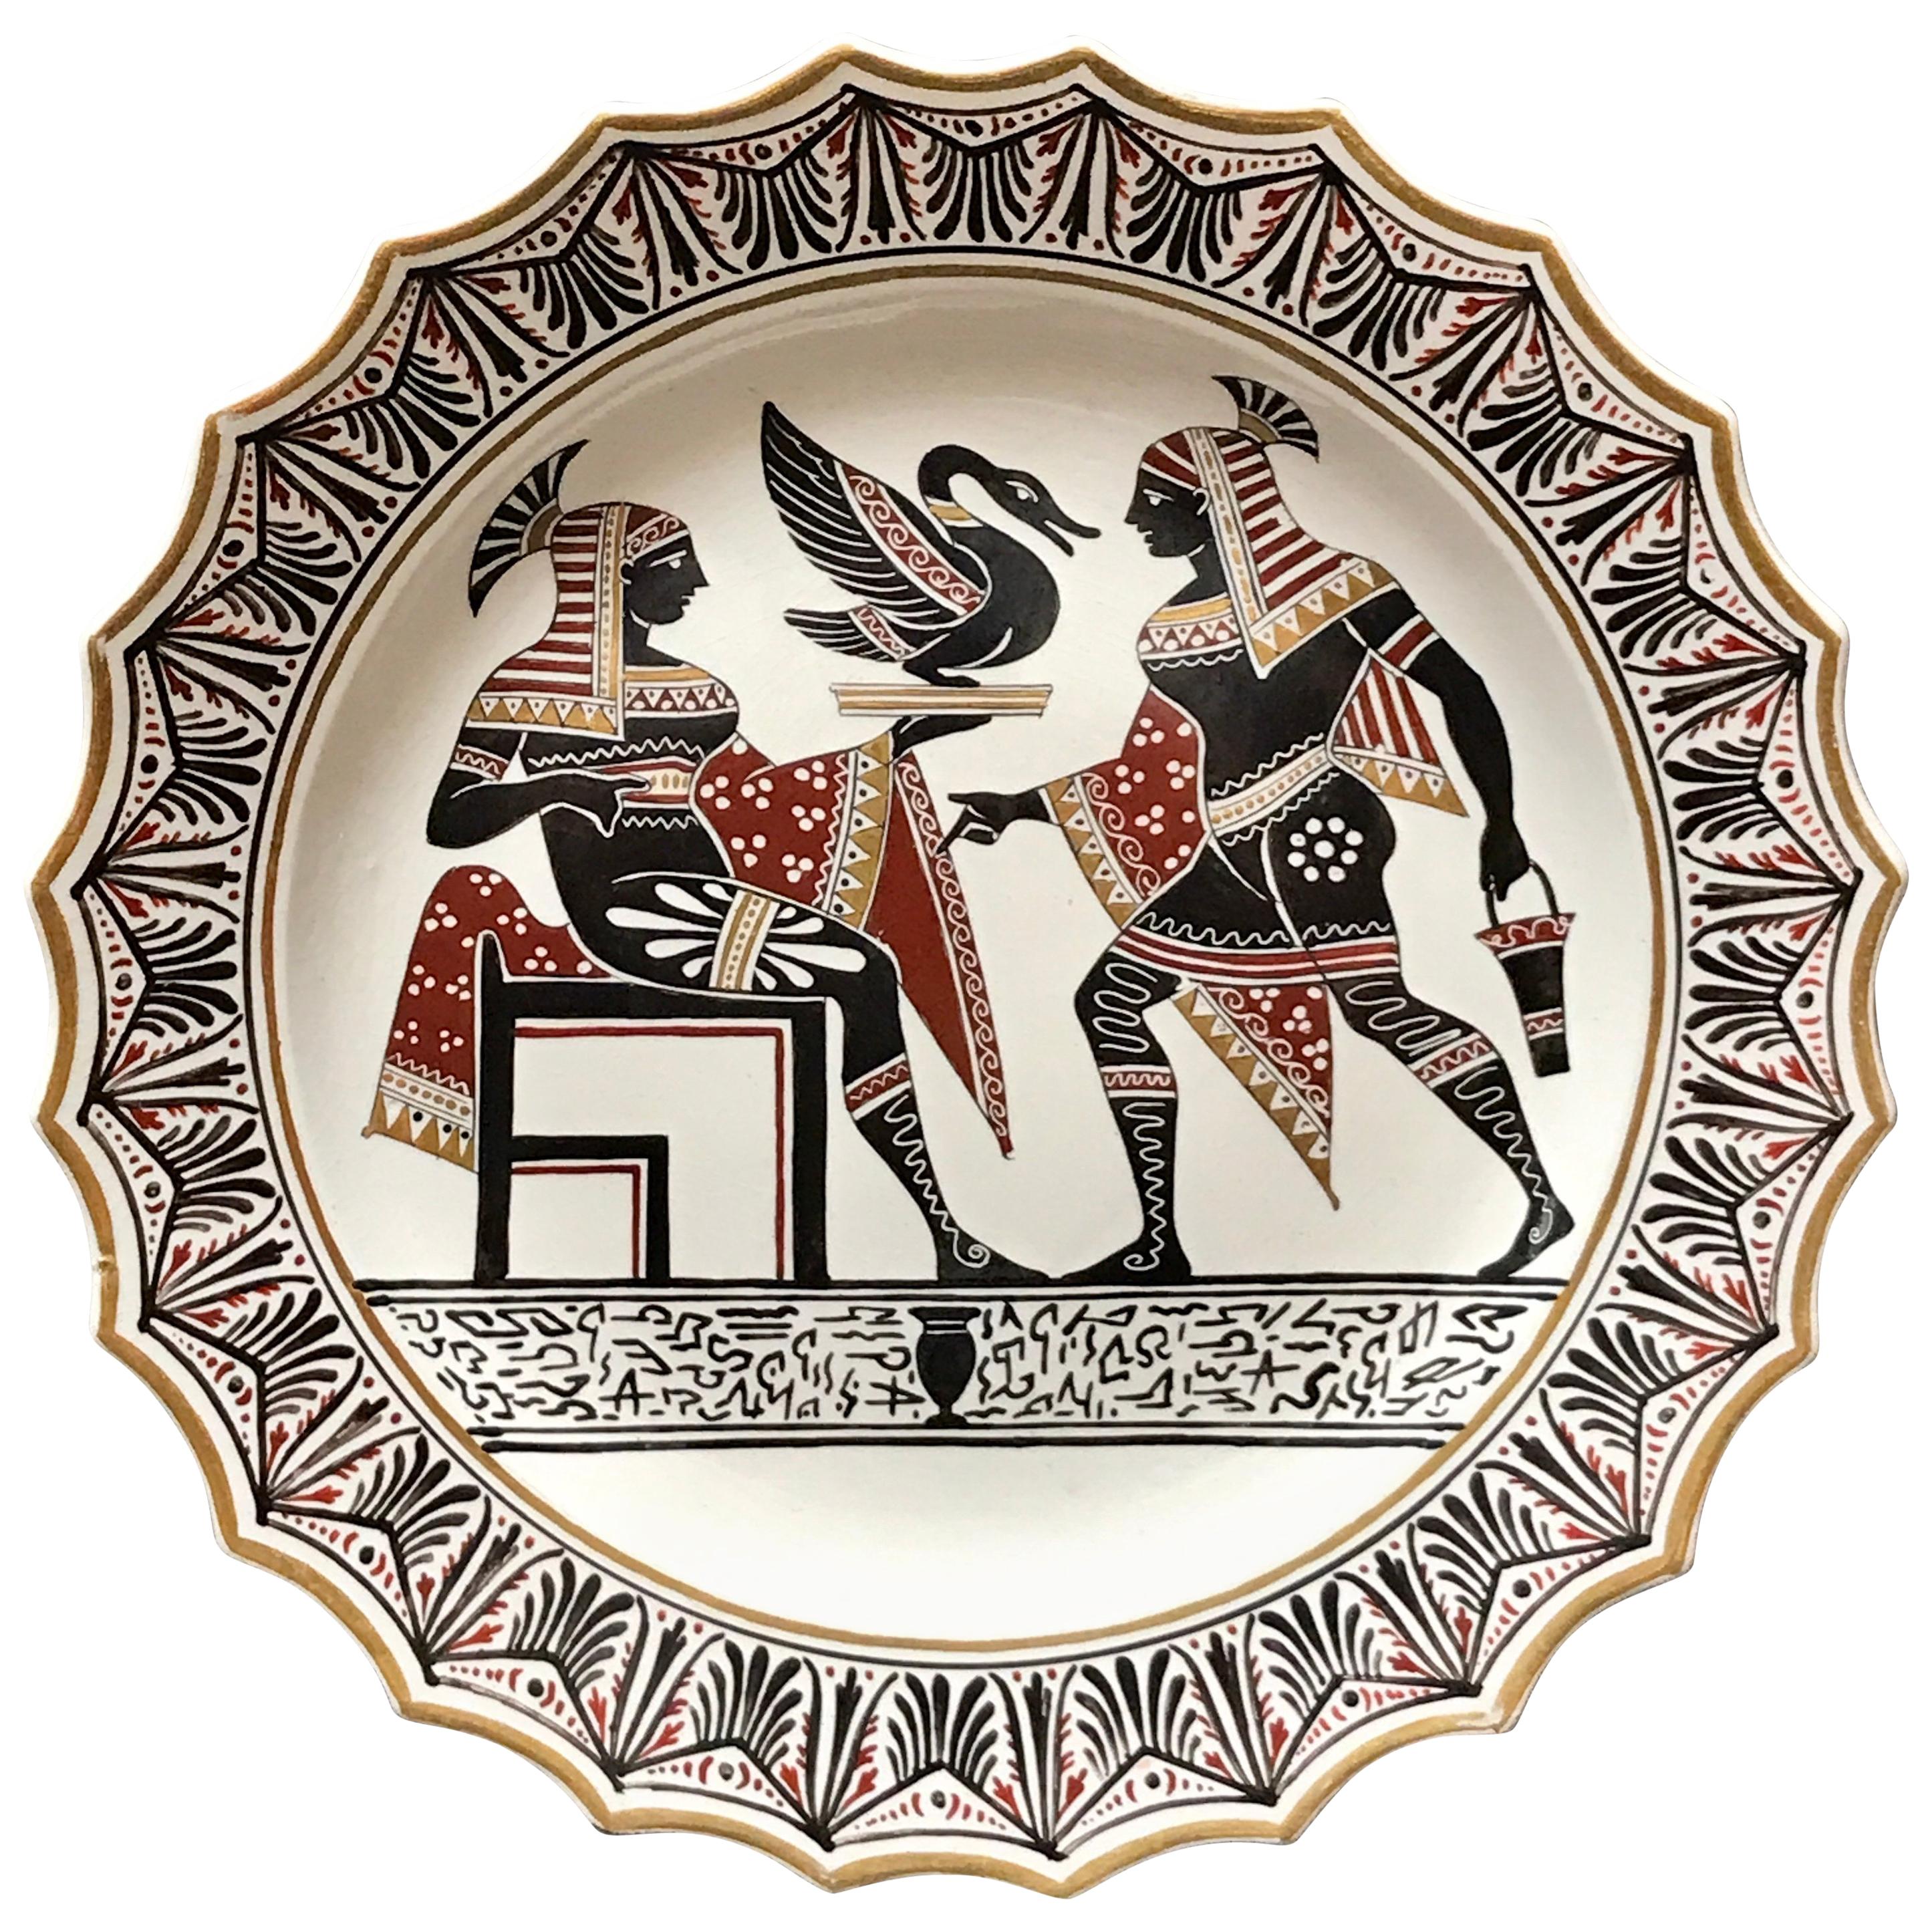 Giustiniani Egyptomania Pottery Plate with Gilt Highlights, Urn